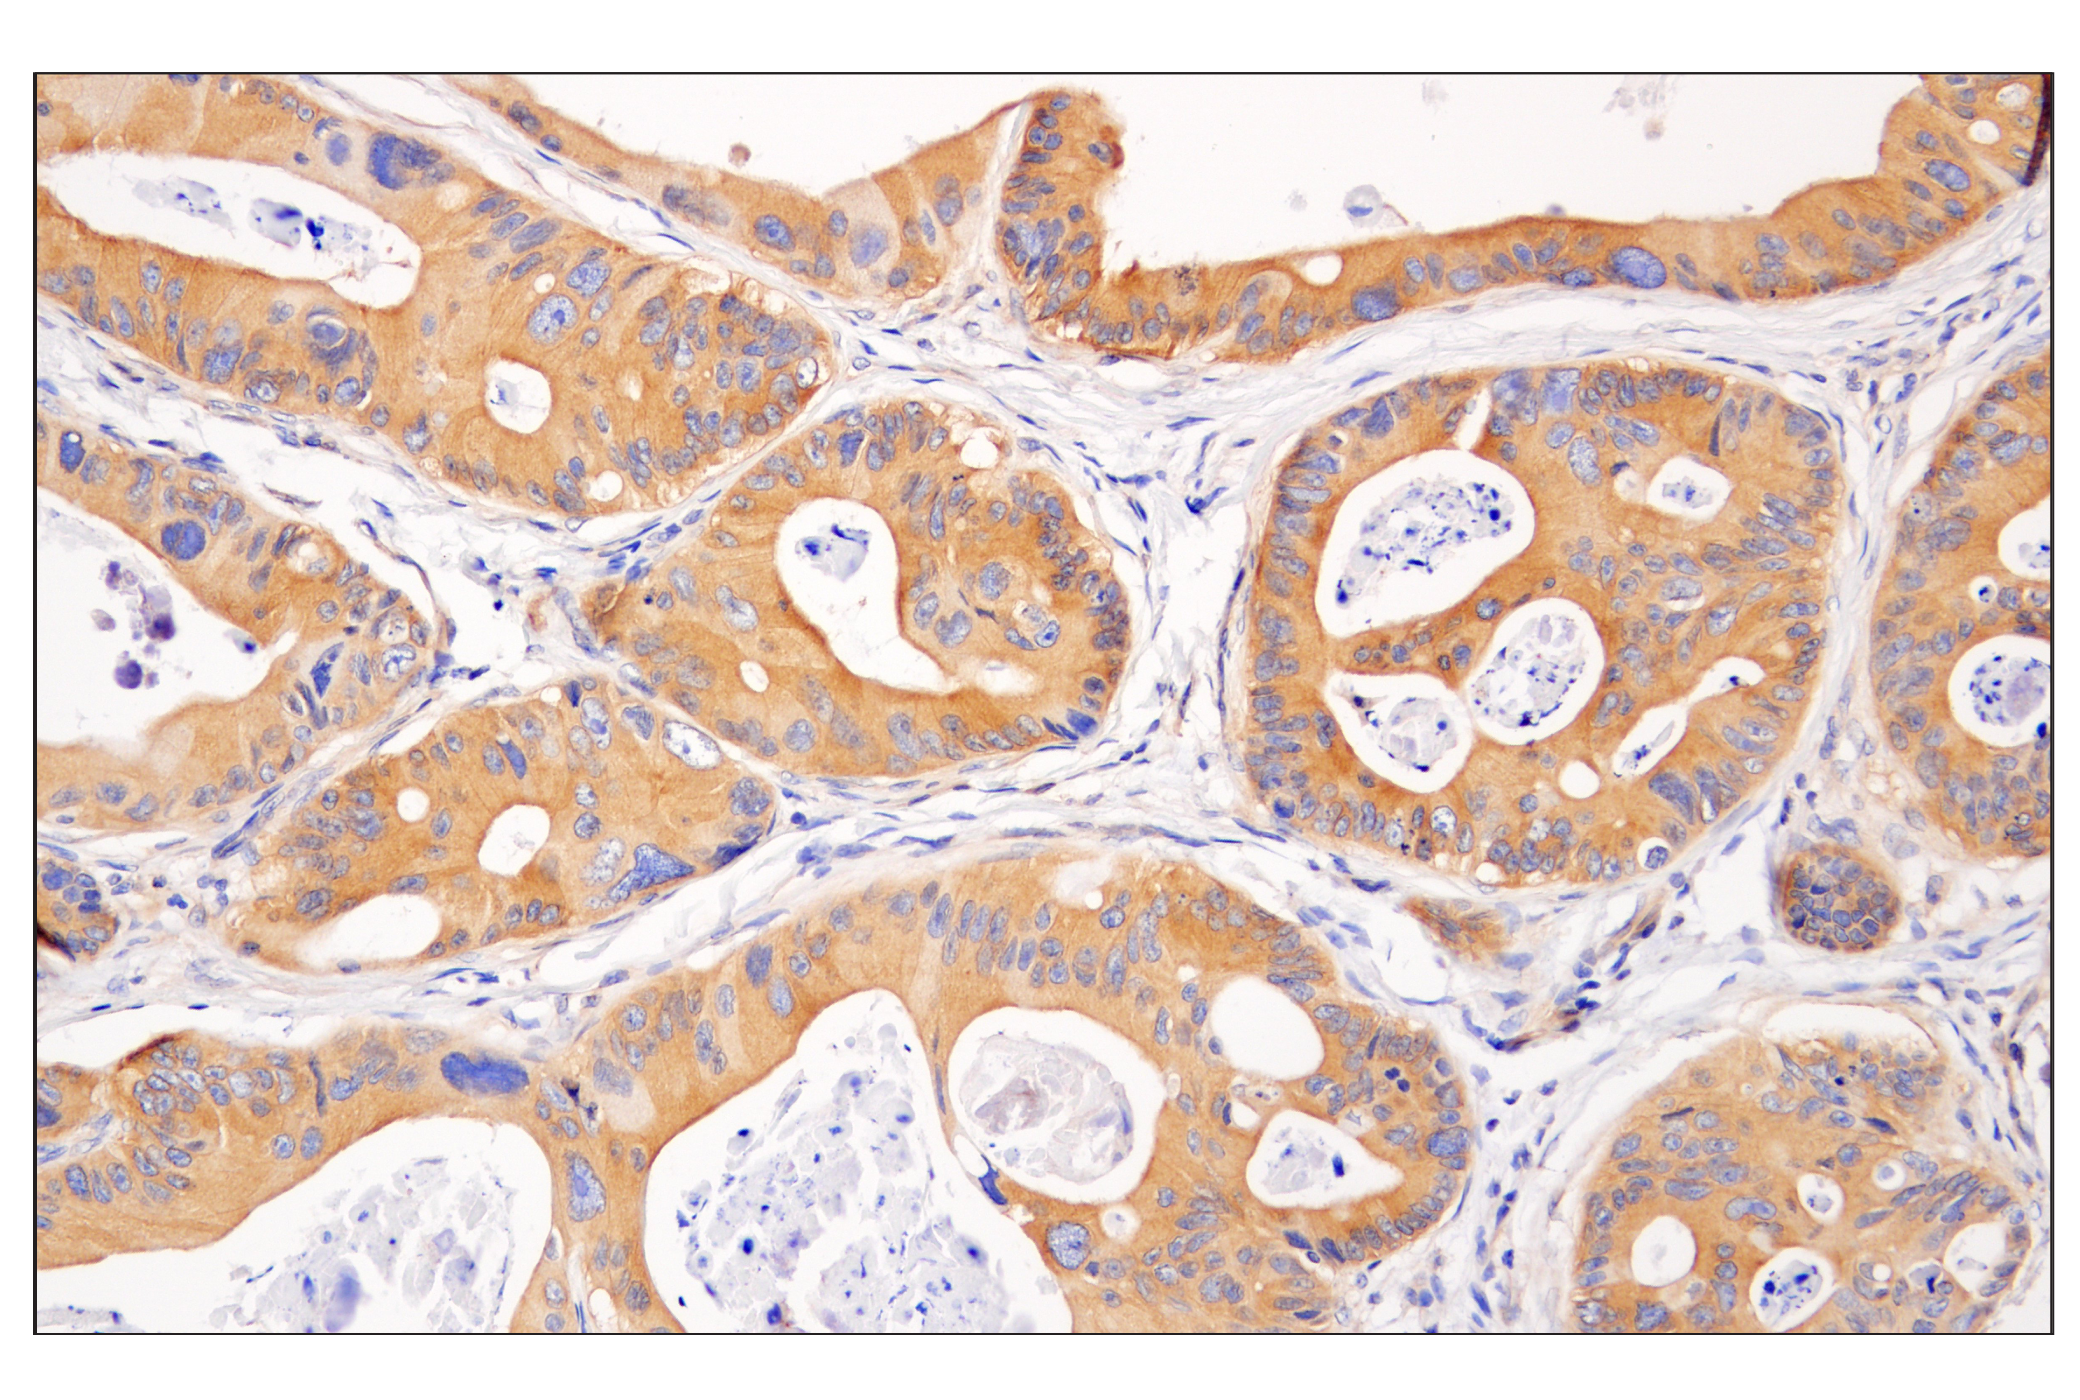  Image 23: PPARγ Regulated Fatty Acid Metabolism Antibody Sampler Kit